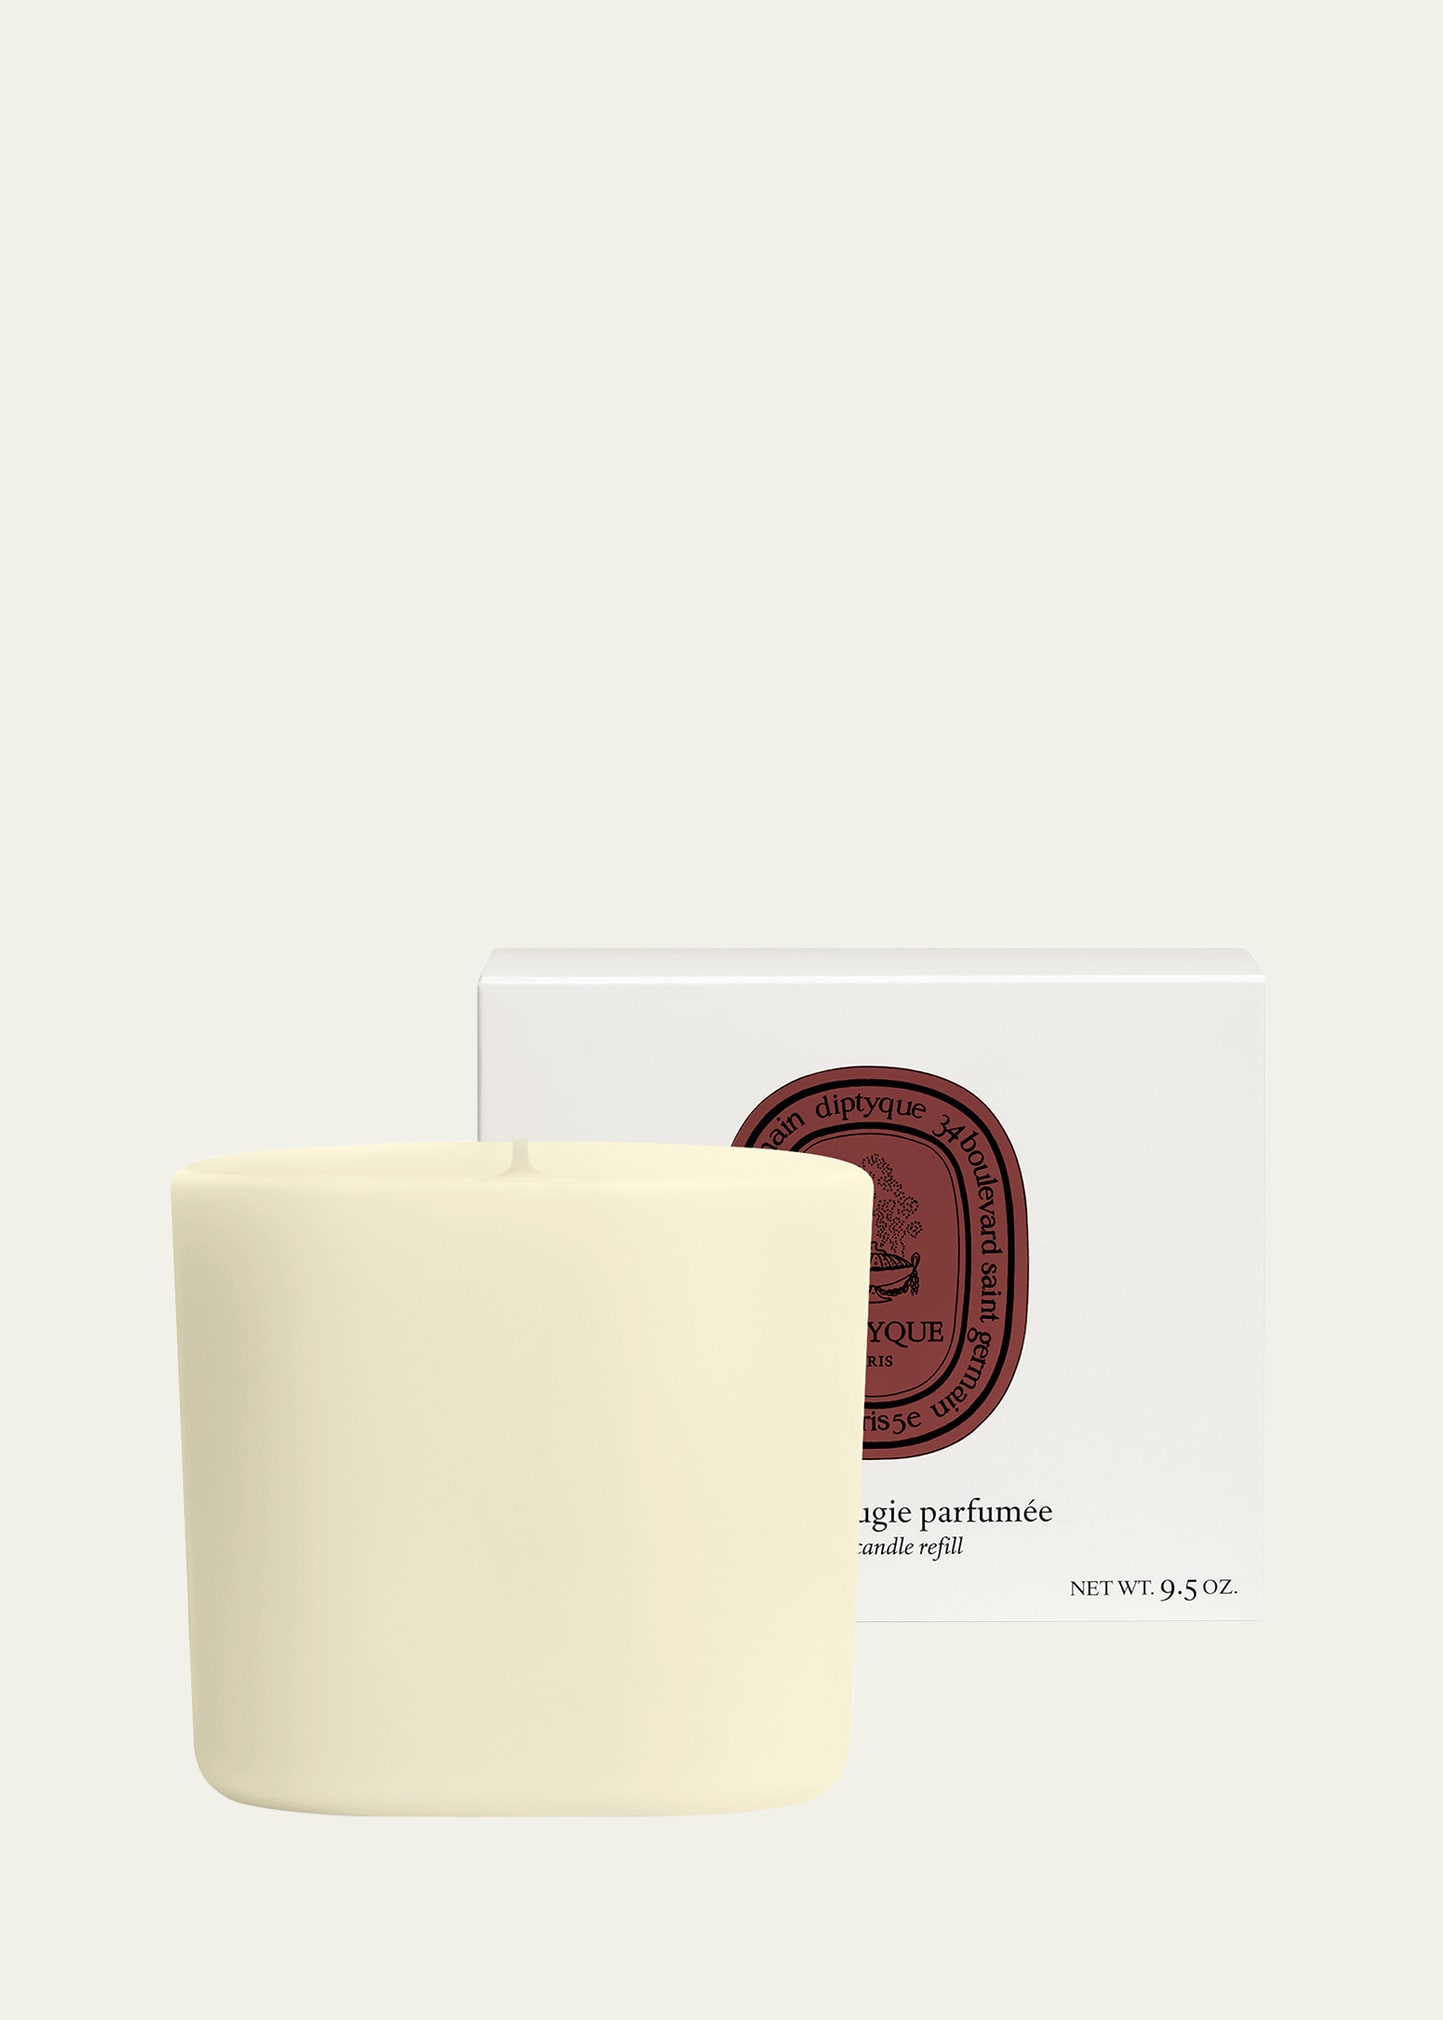 La Foret Reve (Forest Dreams) Candle Refill, 9.5 oz.